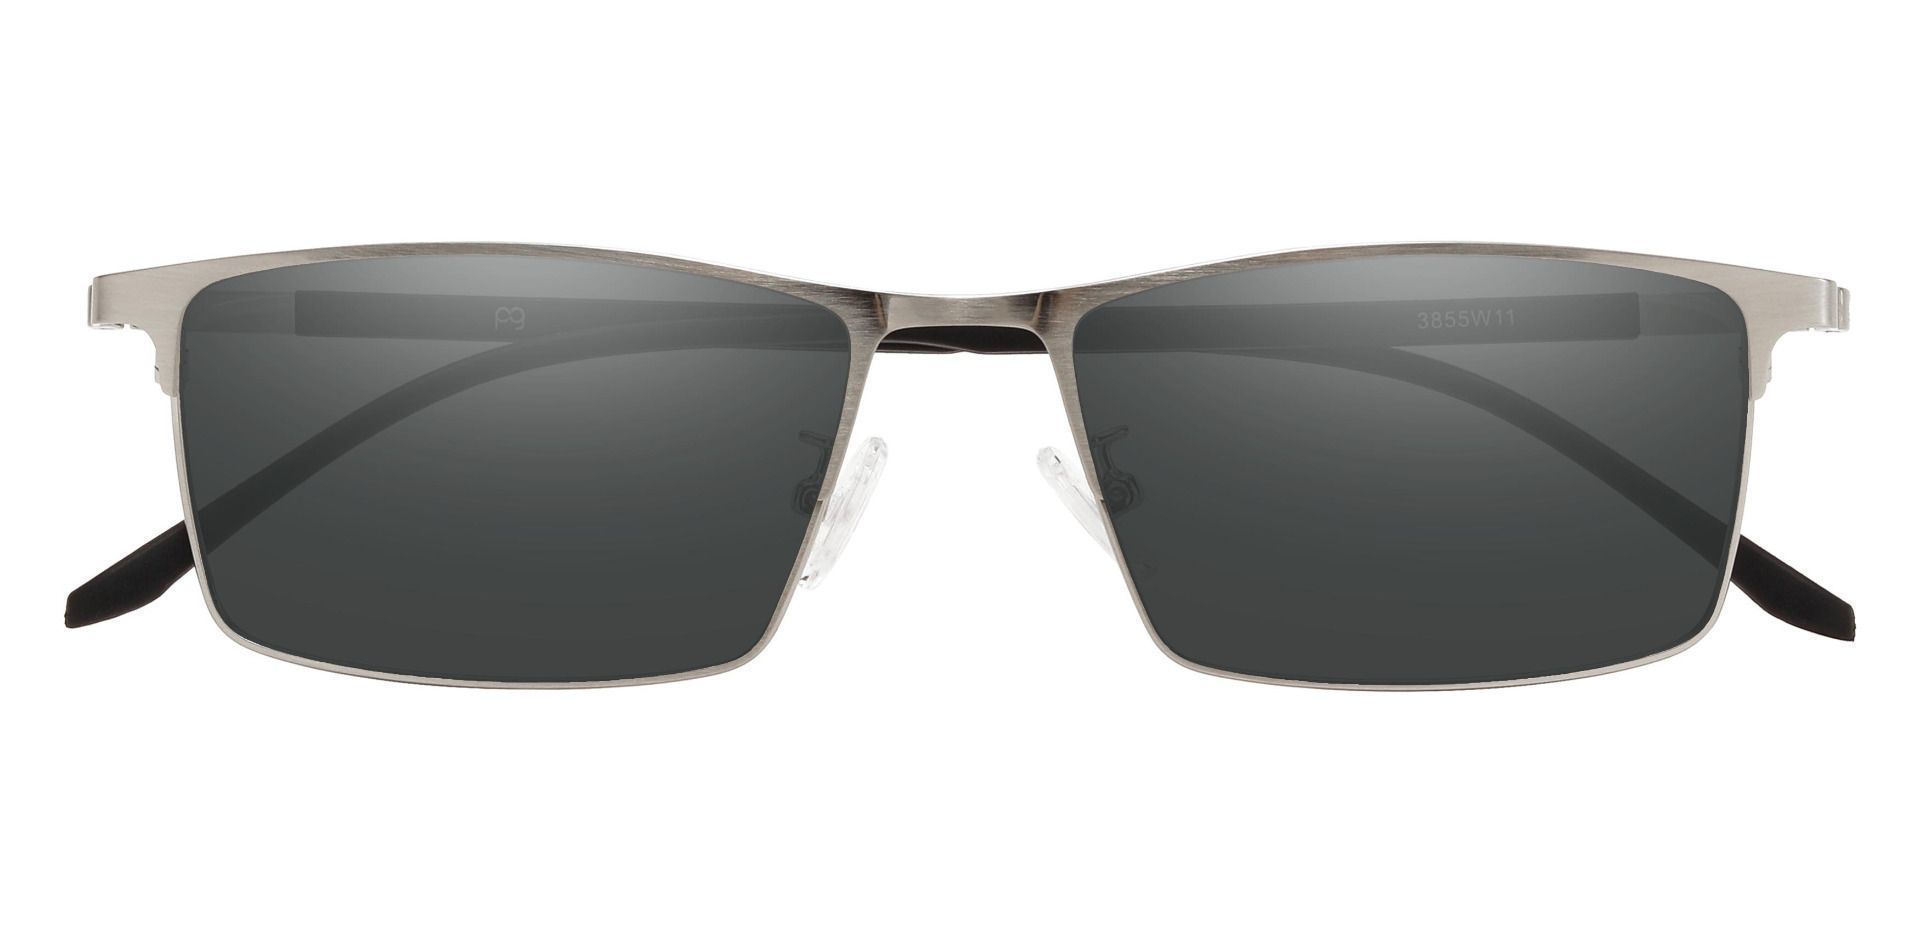 Regis Rectangle Progressive Sunglasses - Silver Frame With Gray Lenses